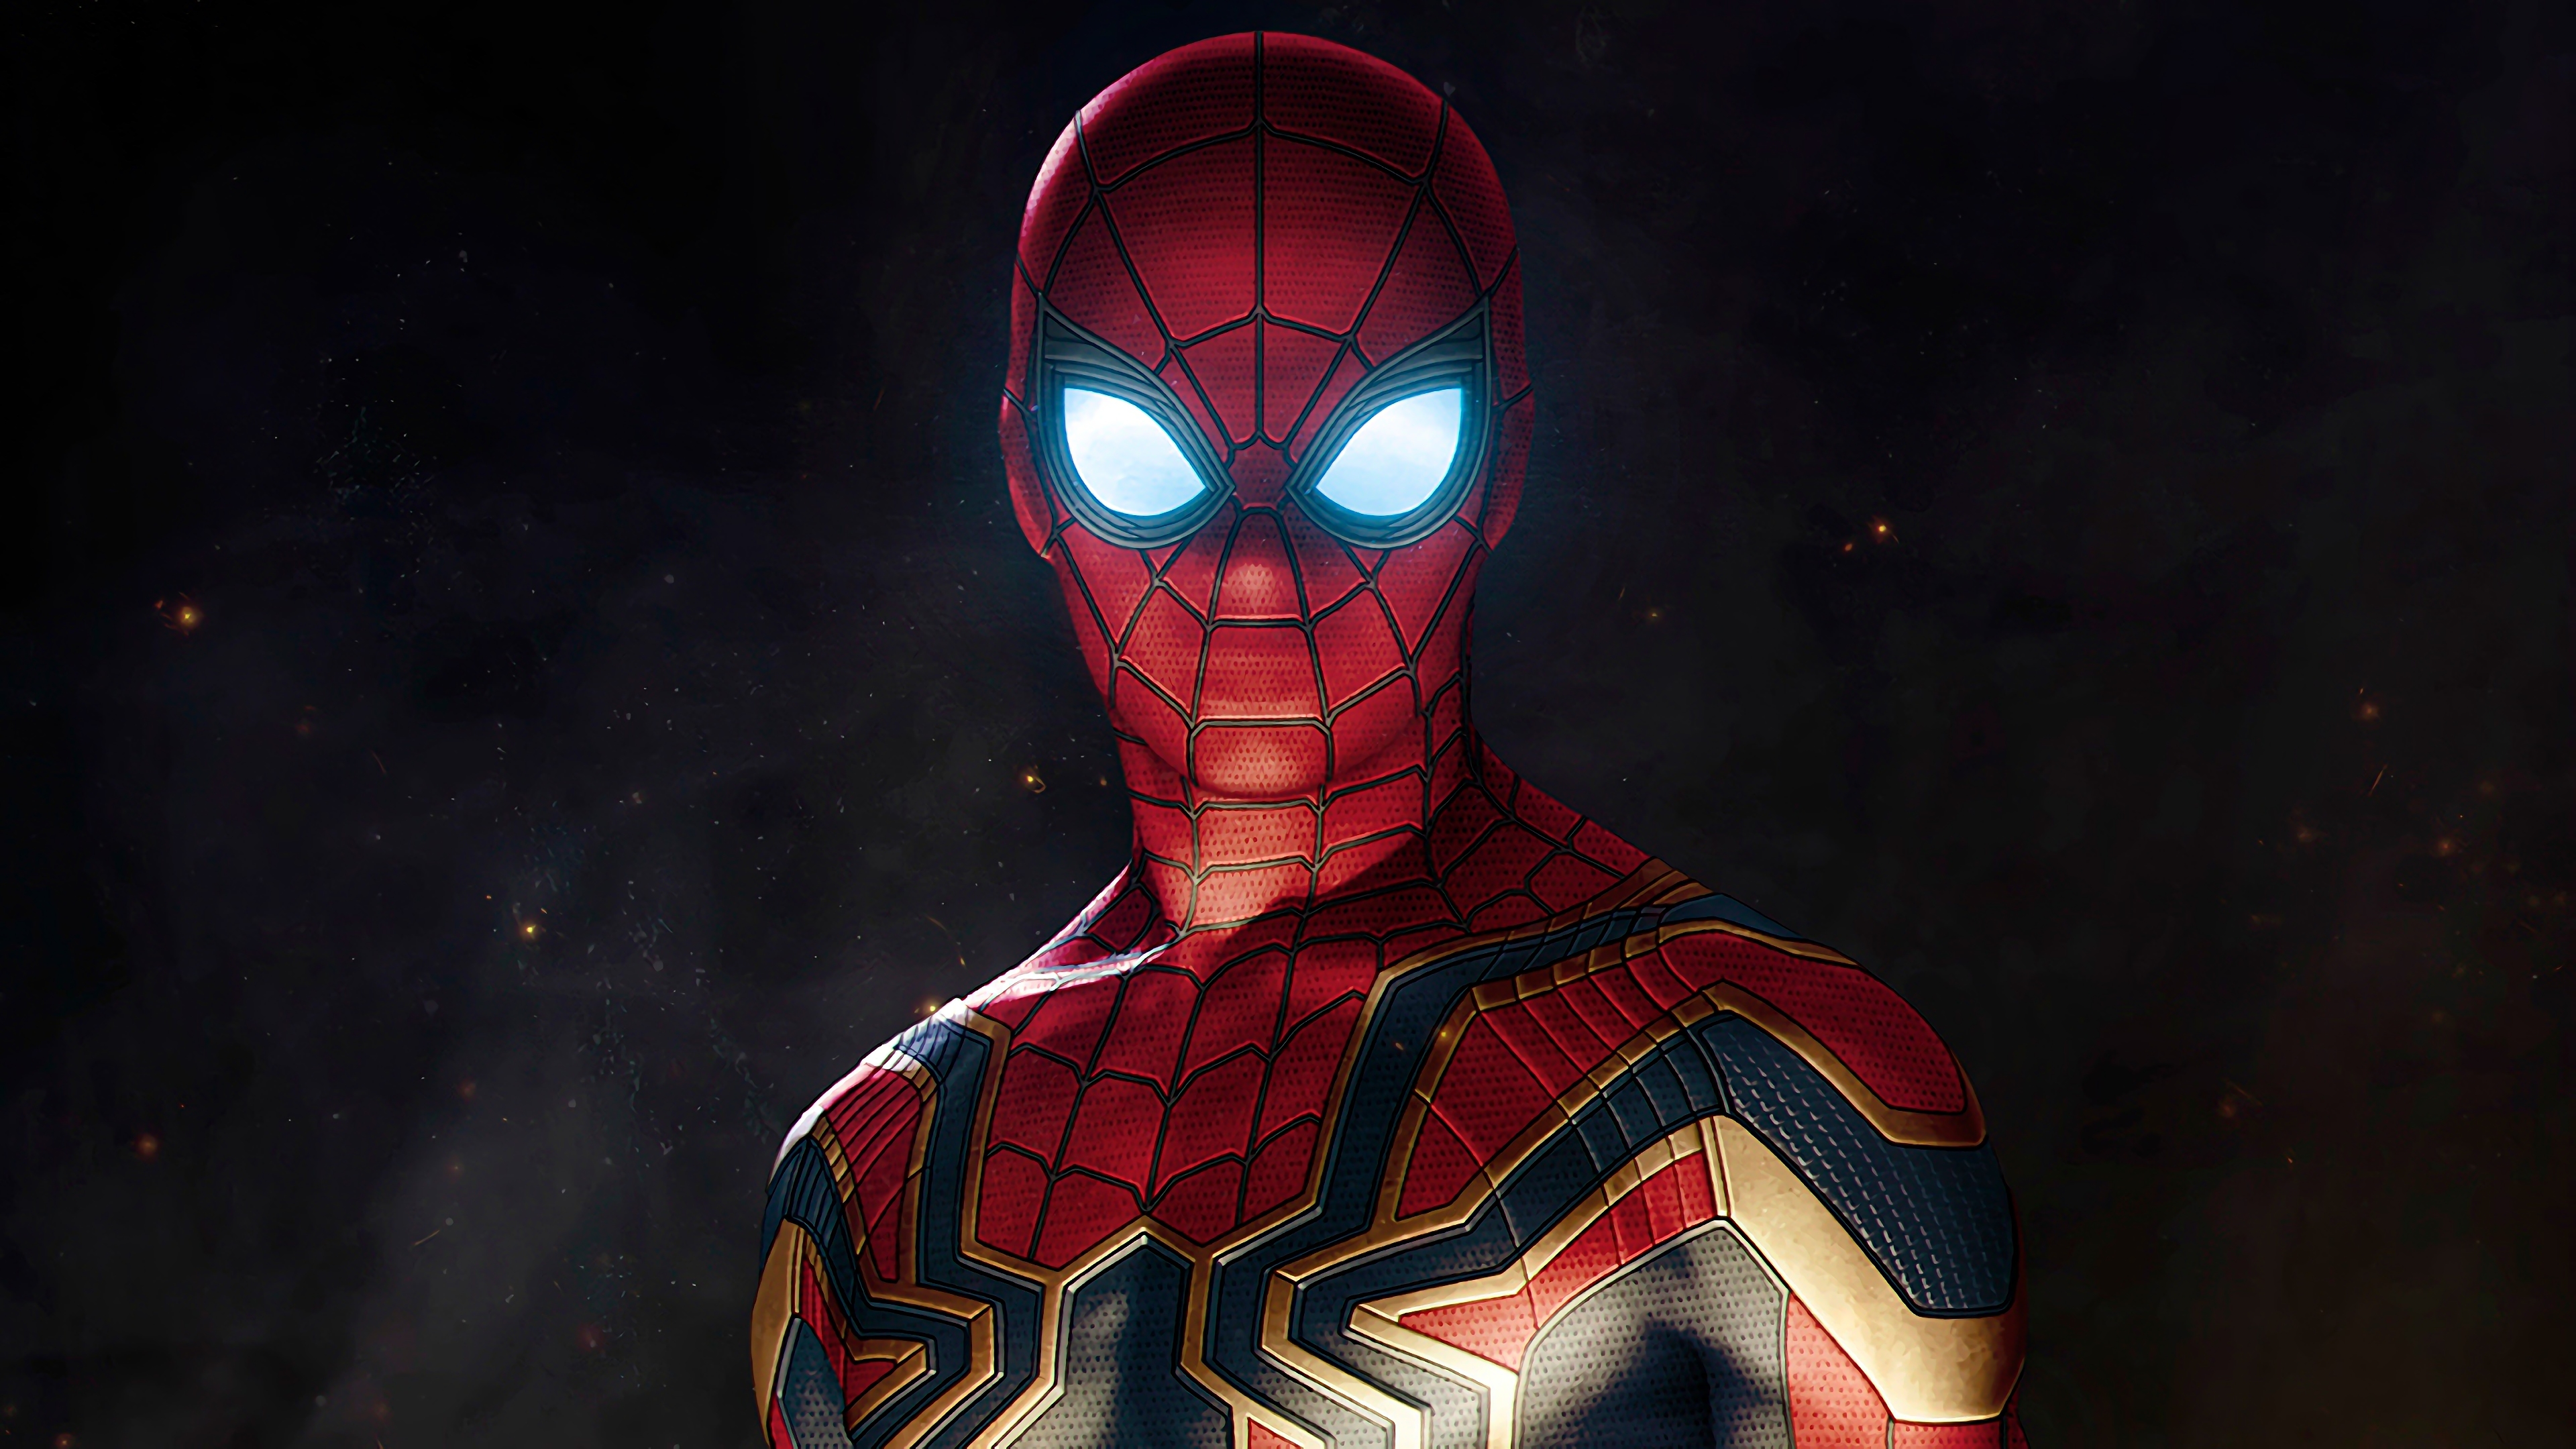 Spider Man in Avengers Infinity War 4K Wallpapers